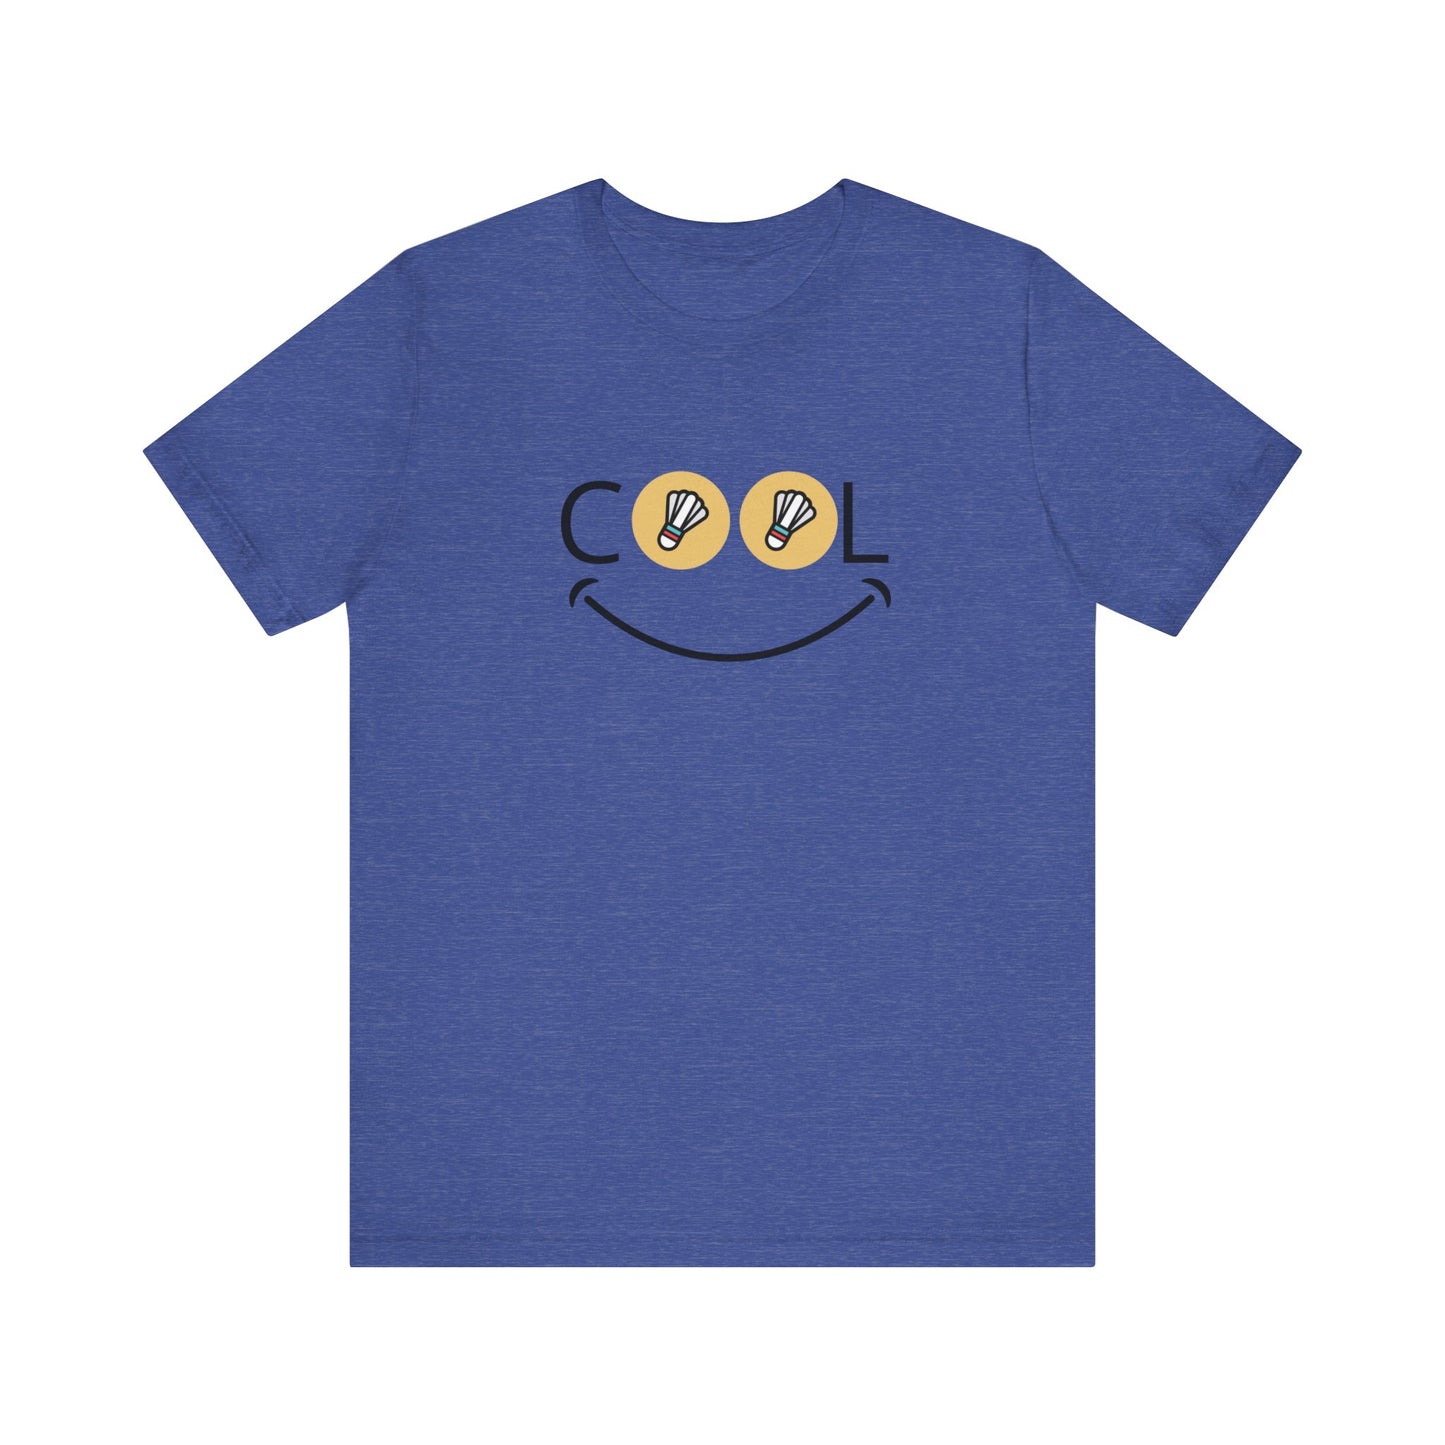 Badminton "Cool" Smiley Face T-shirt